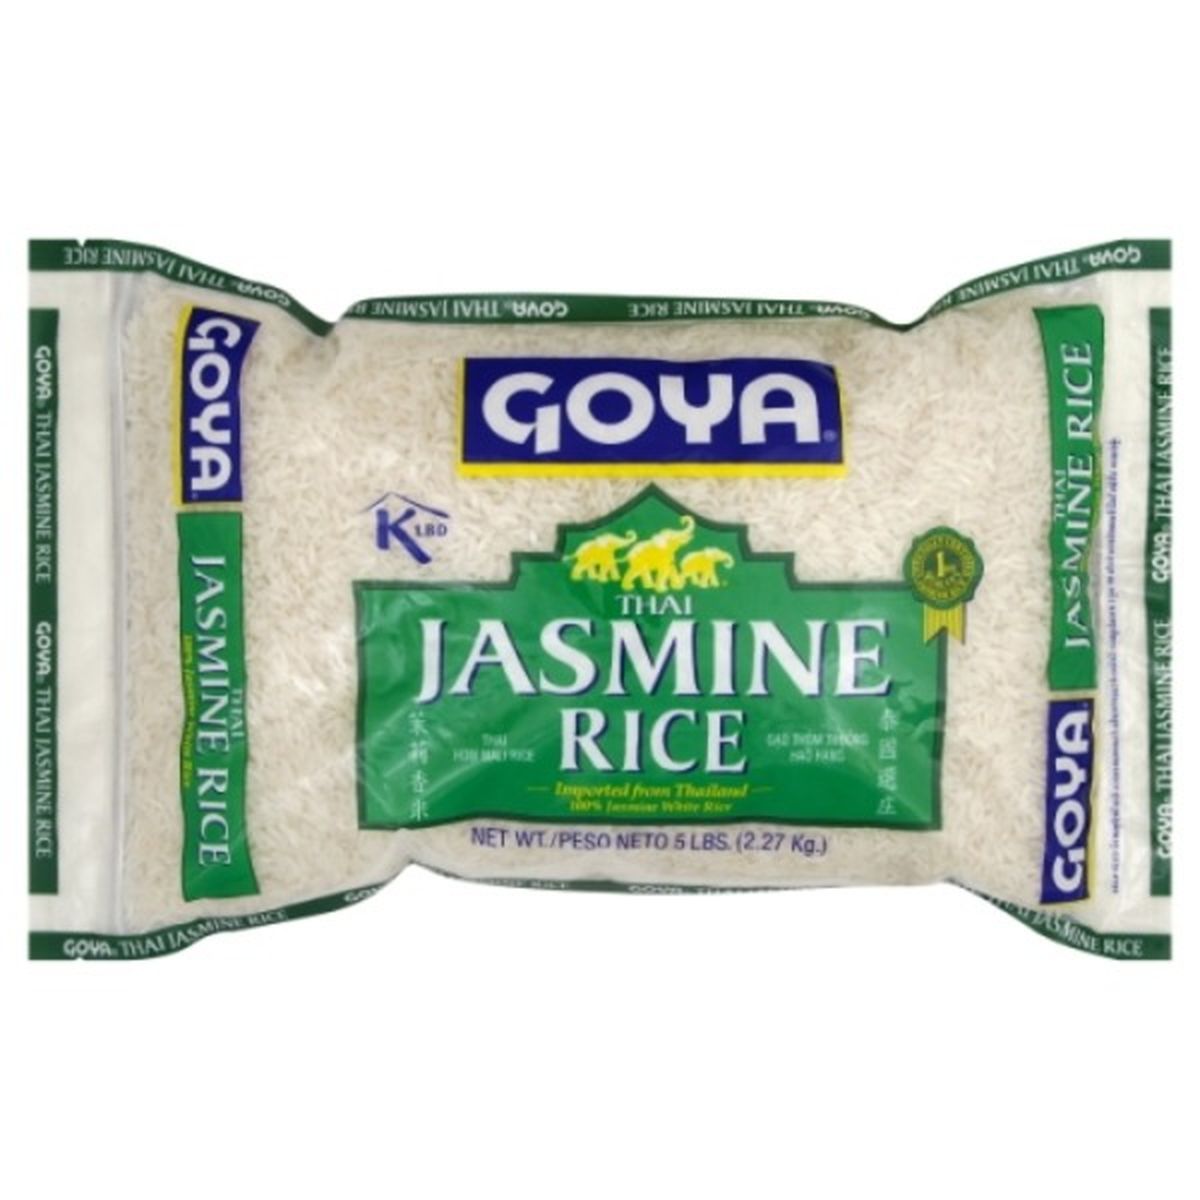 Calories in Goya Jasmine Rice, Thai